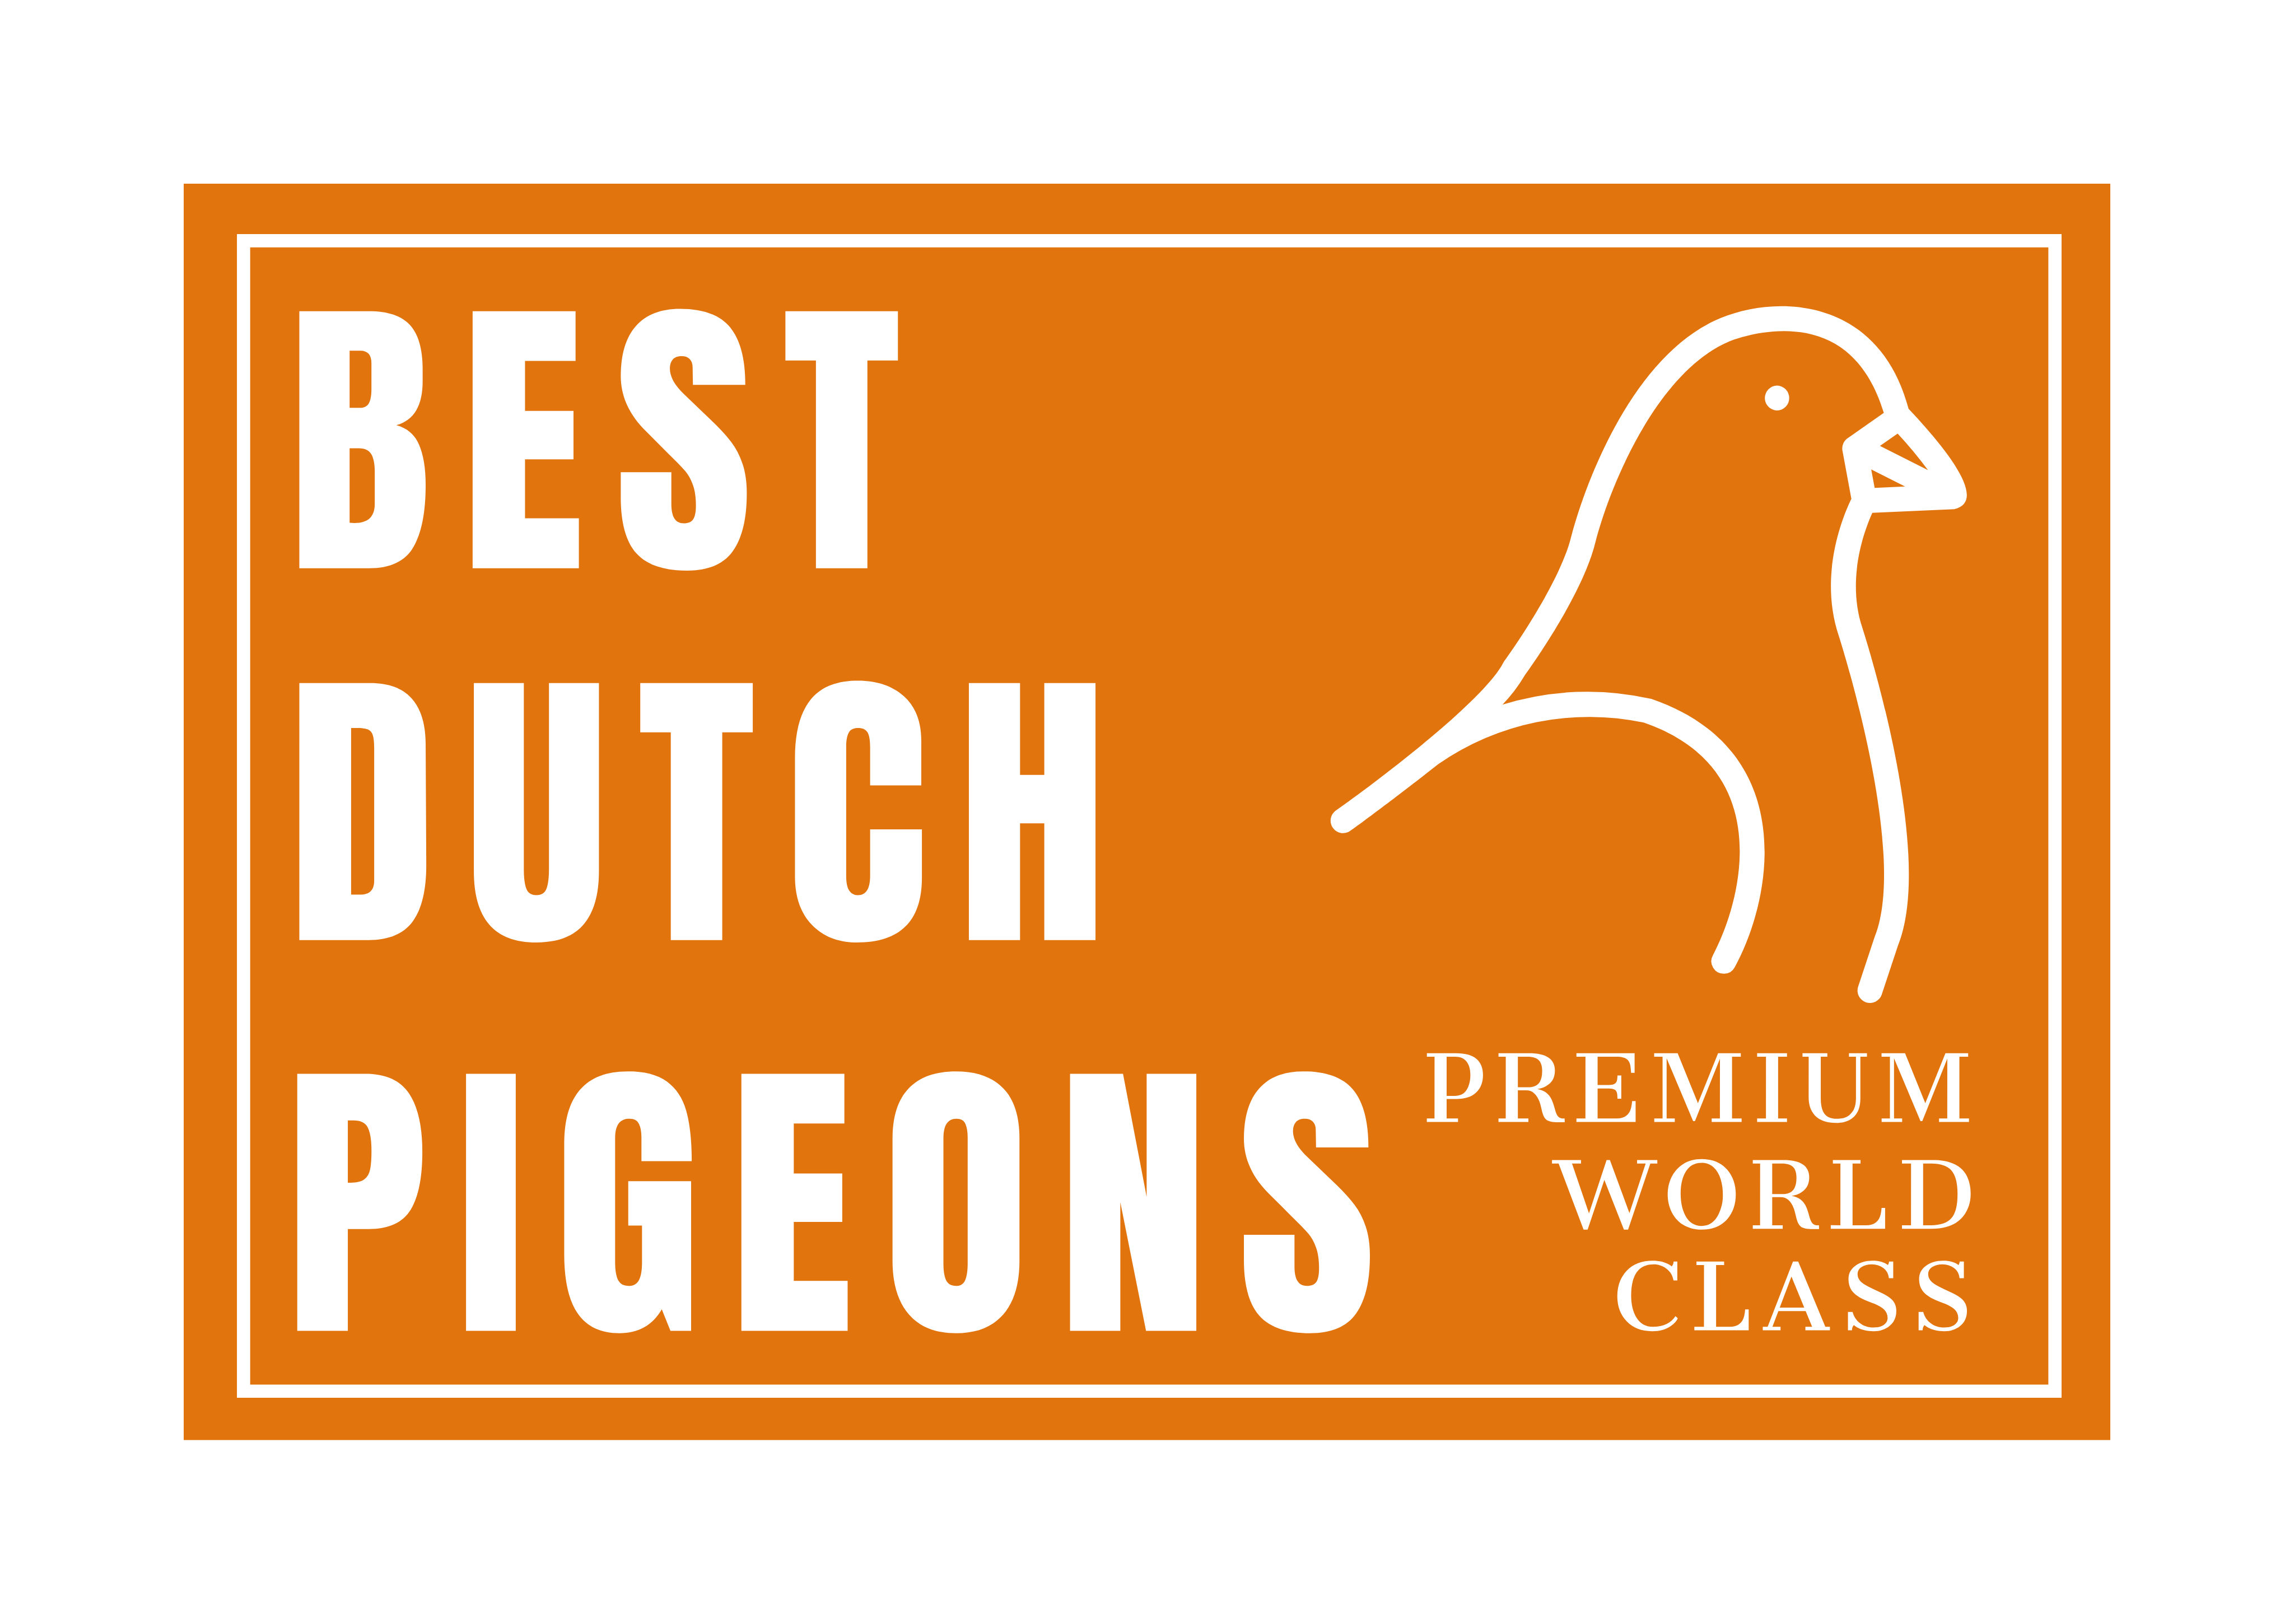 Best Dutch Pigeons